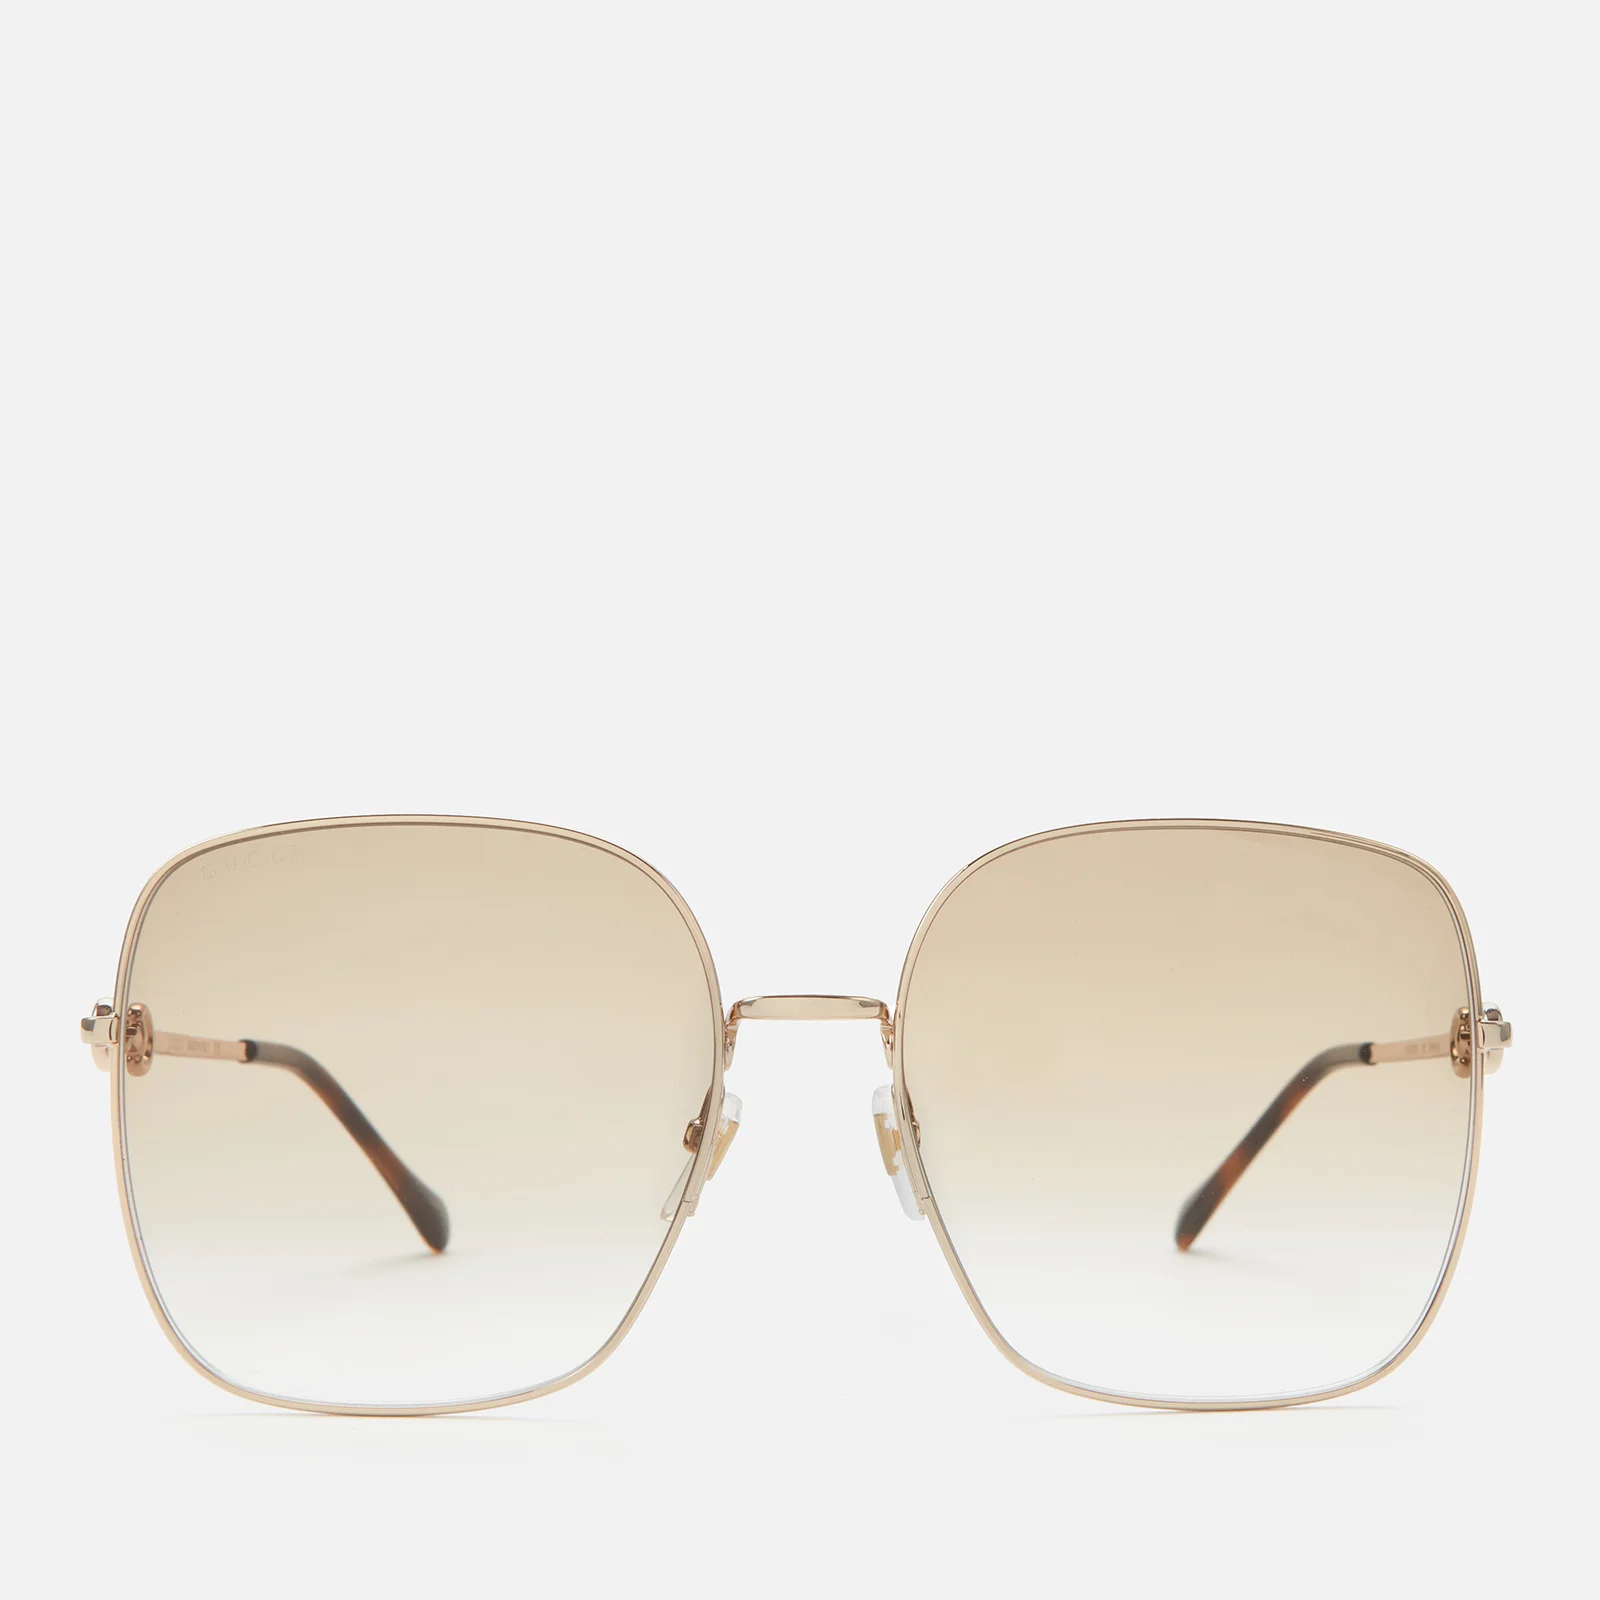 Gucci Women's Horsebit Metal Frame Sunglasses - Gold/Gold/Brown Image 1